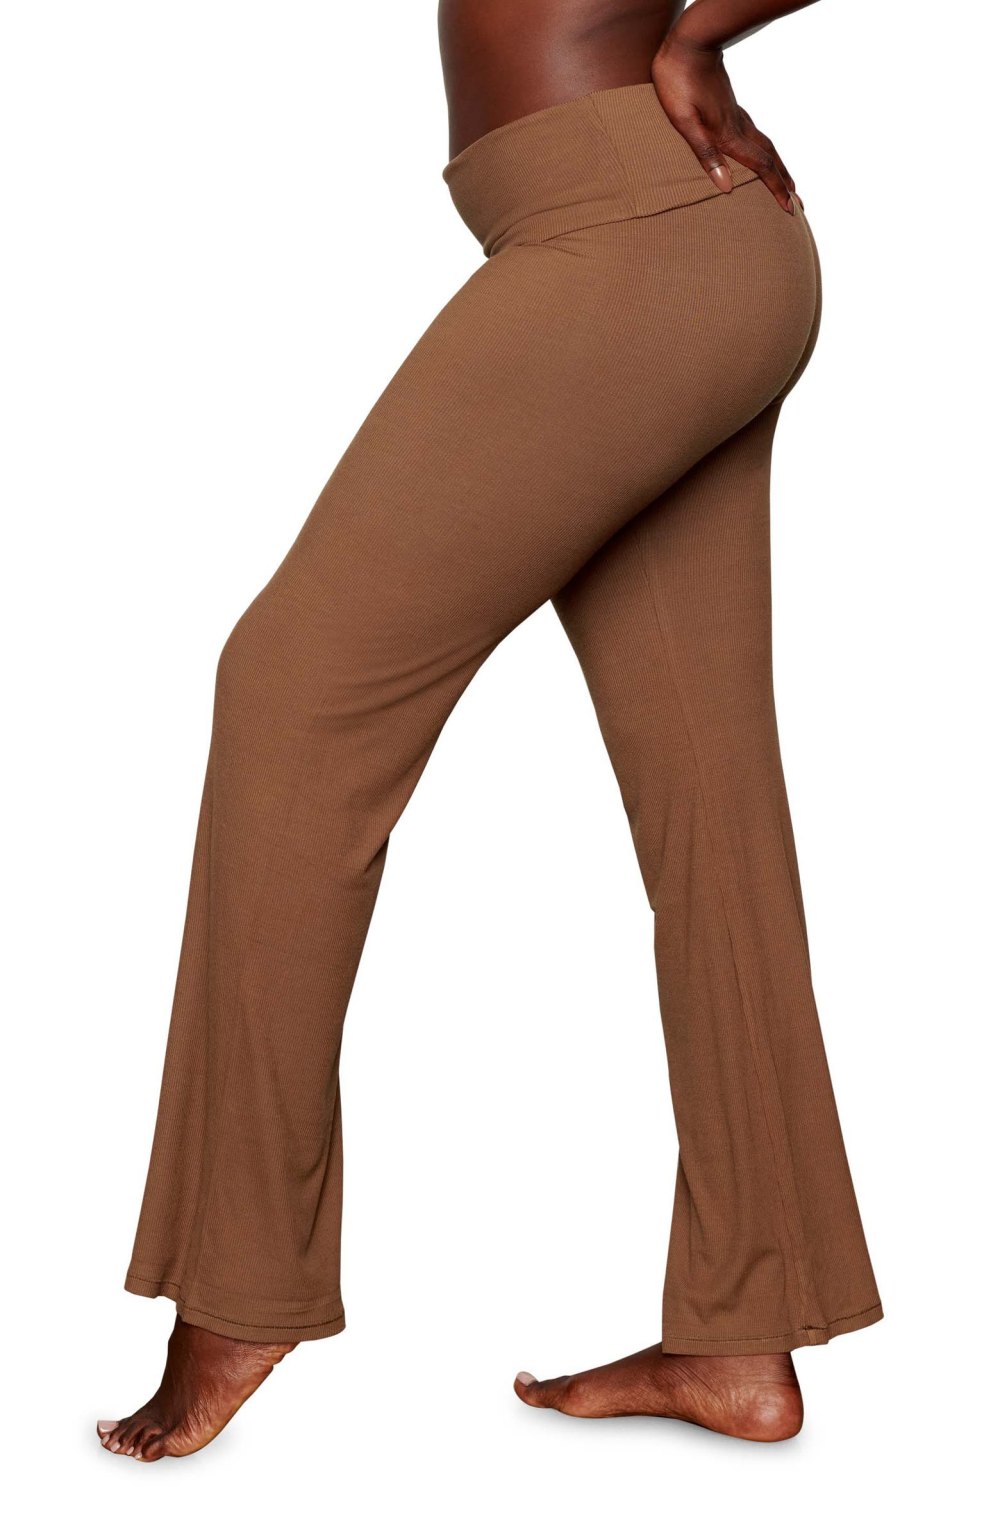 Skims Camel Soft Lounge Foldover Pants, Size 4X New